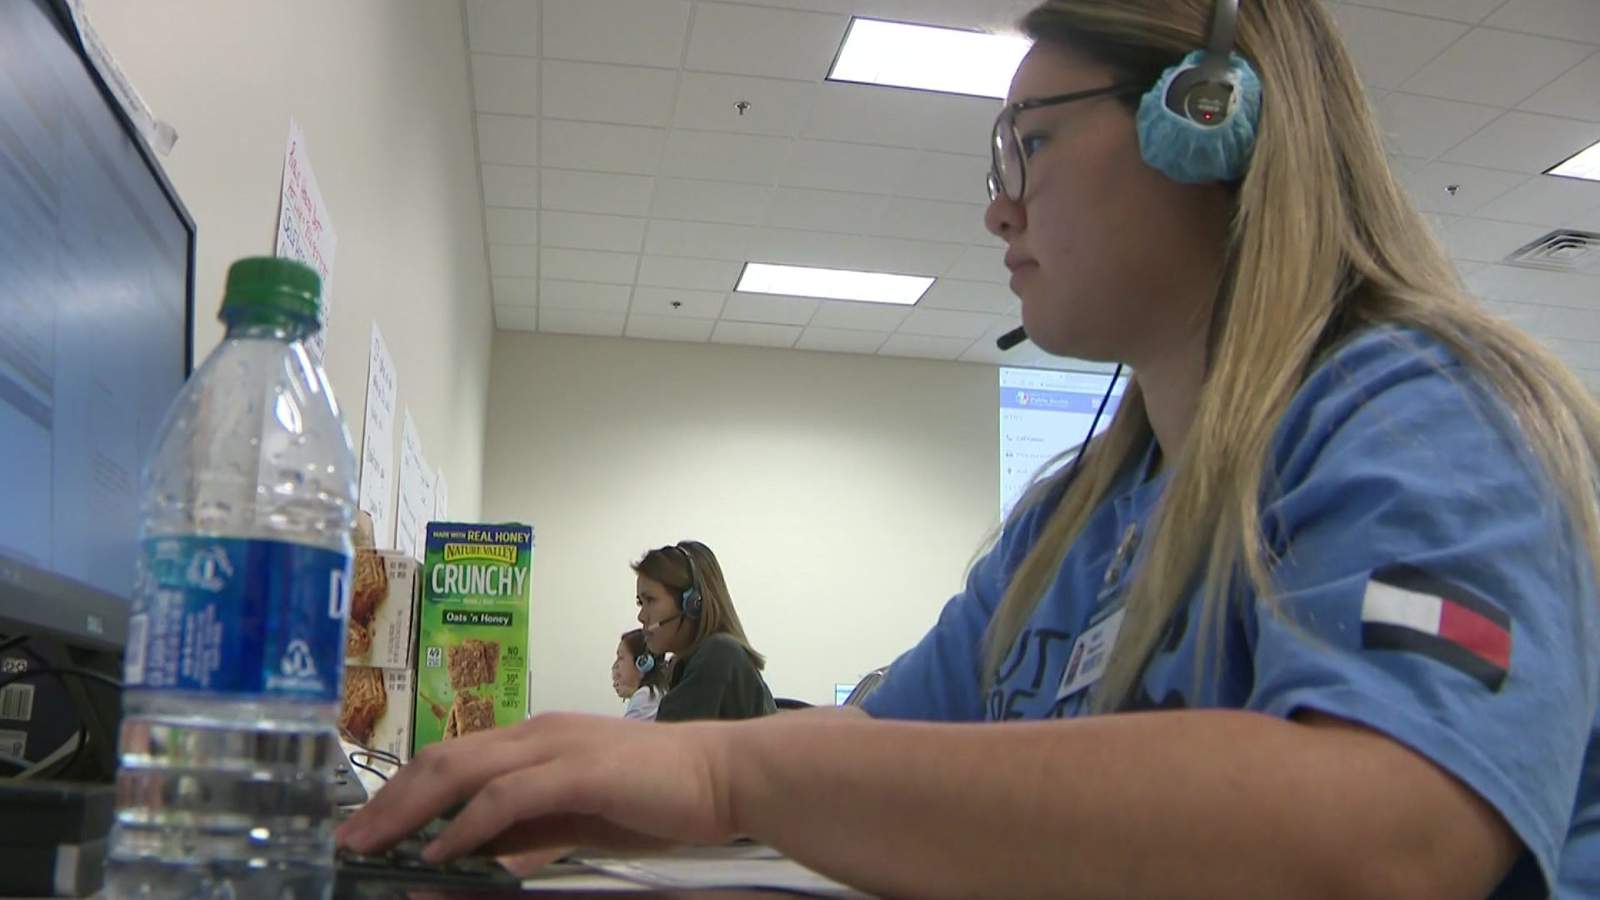 Harris County Judge Lina Hidalgo provides tour inside call center responsible for health pre-screenings